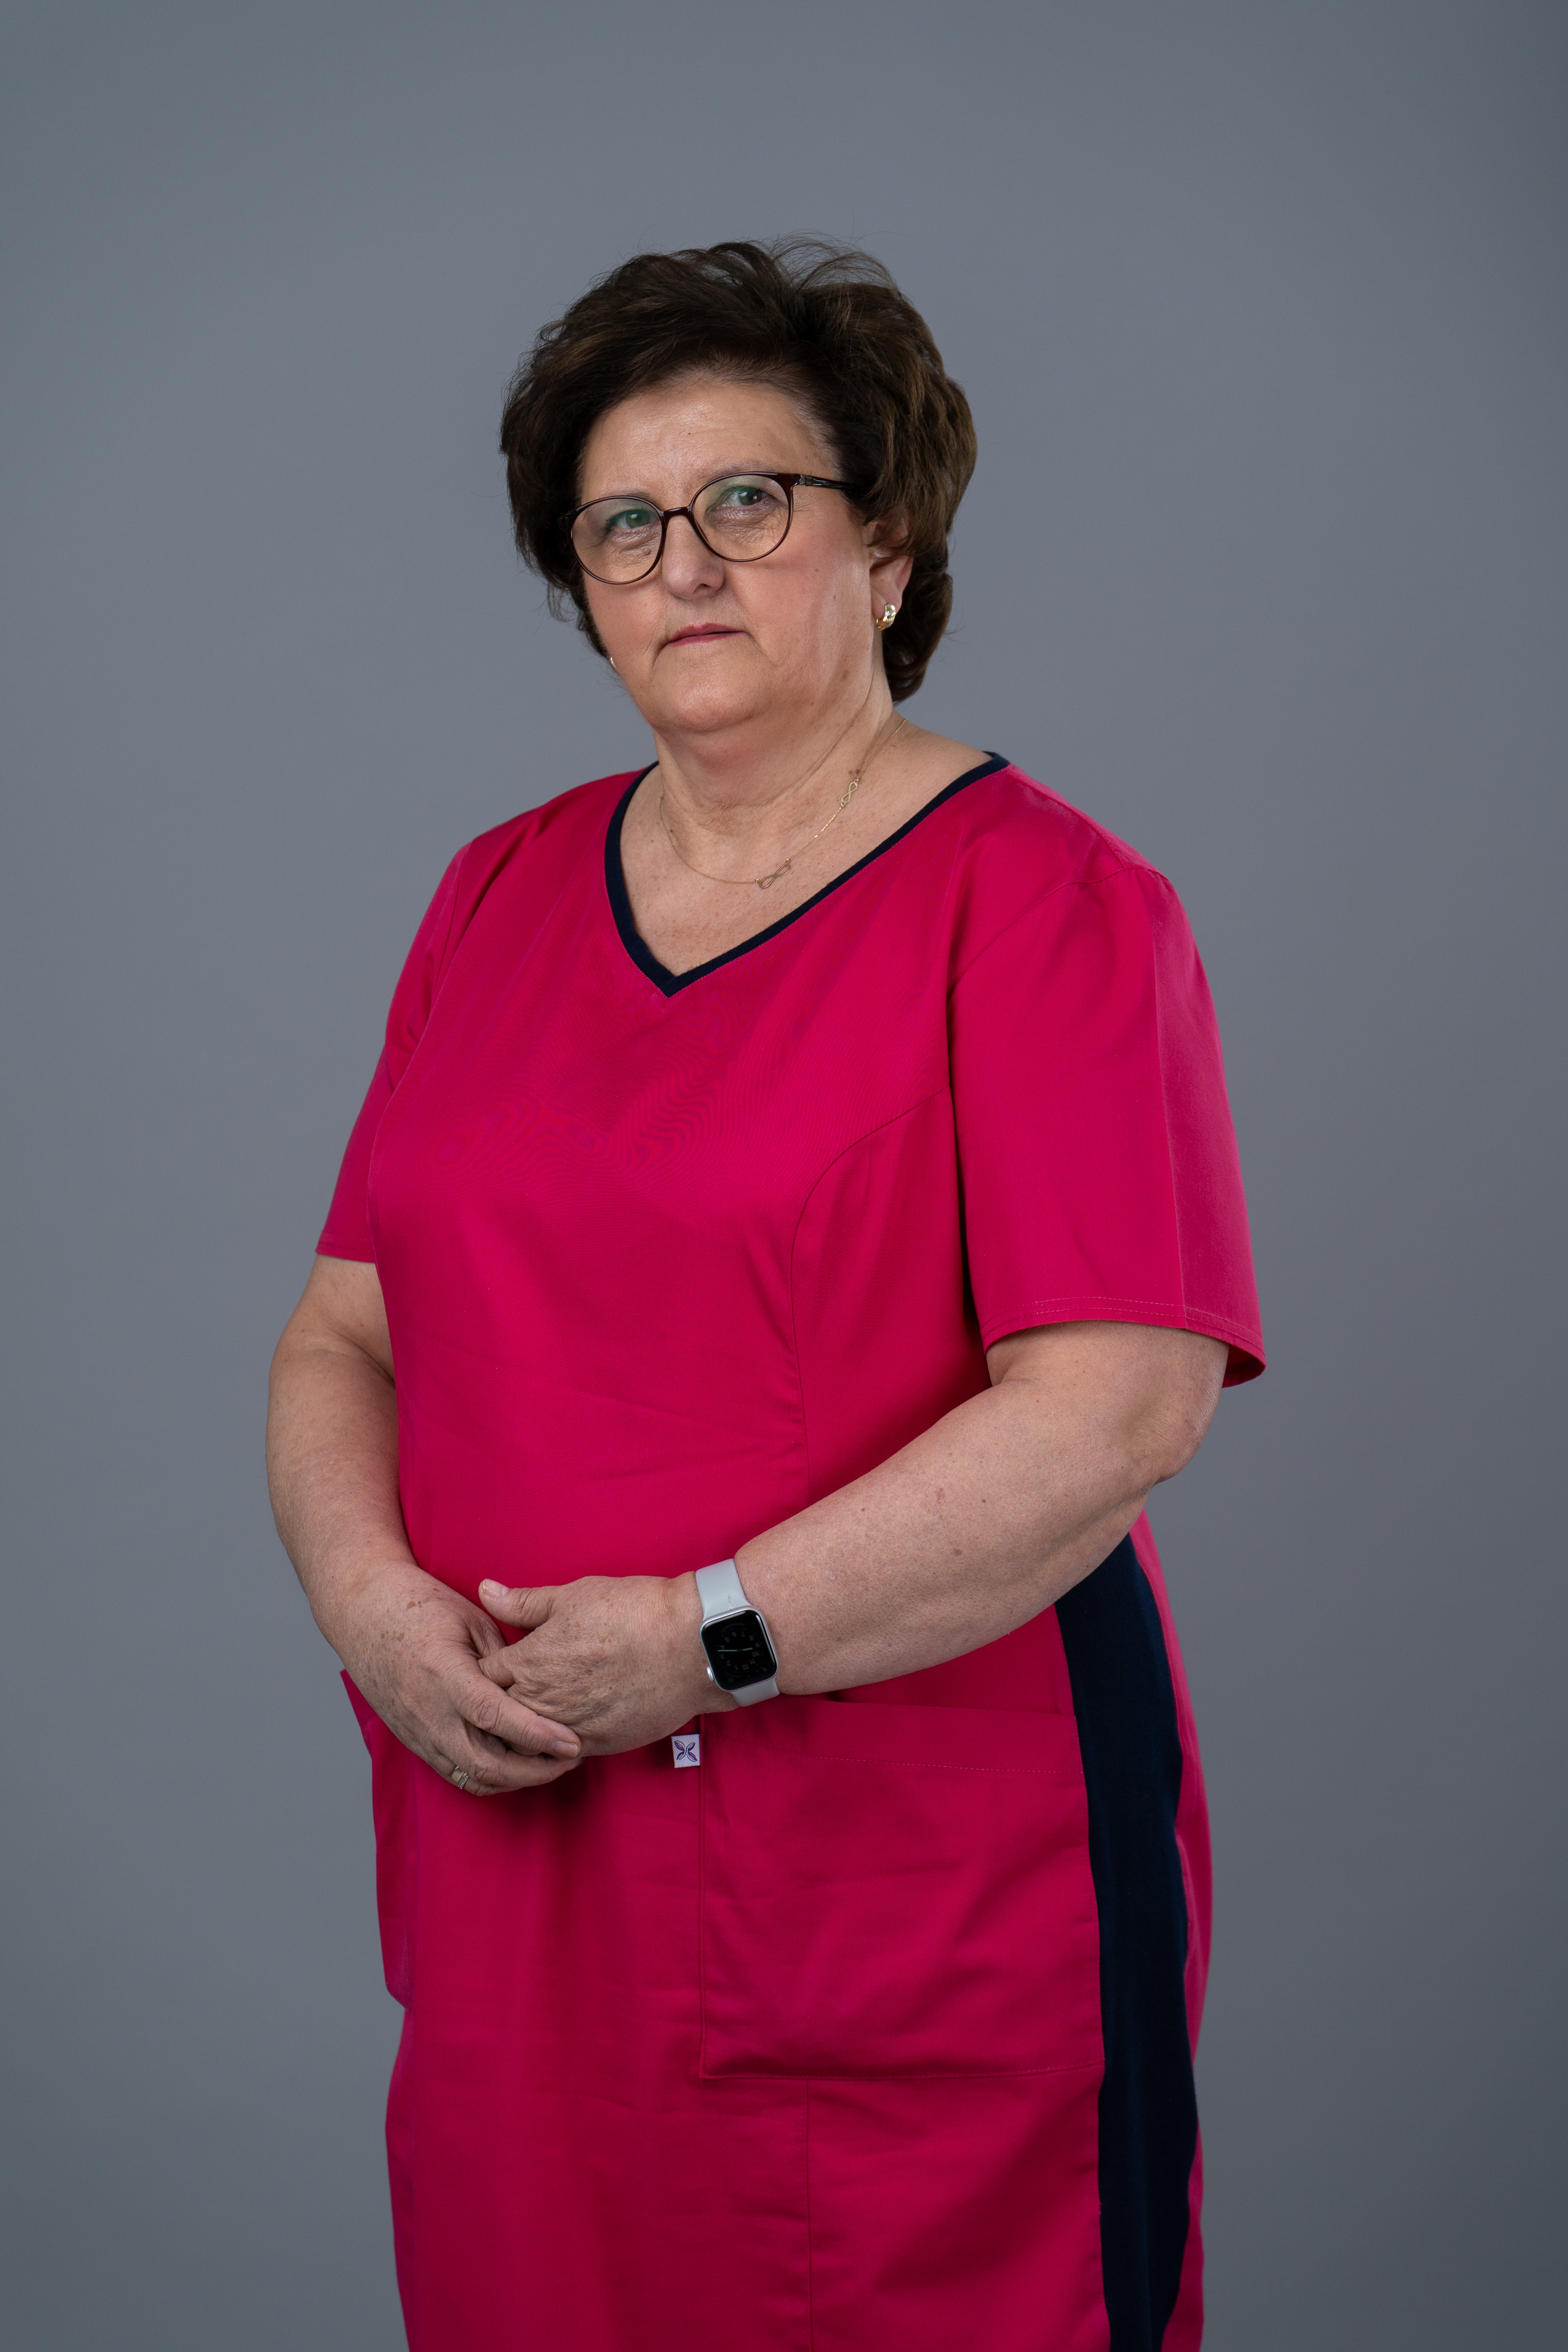 Renata Serwińska